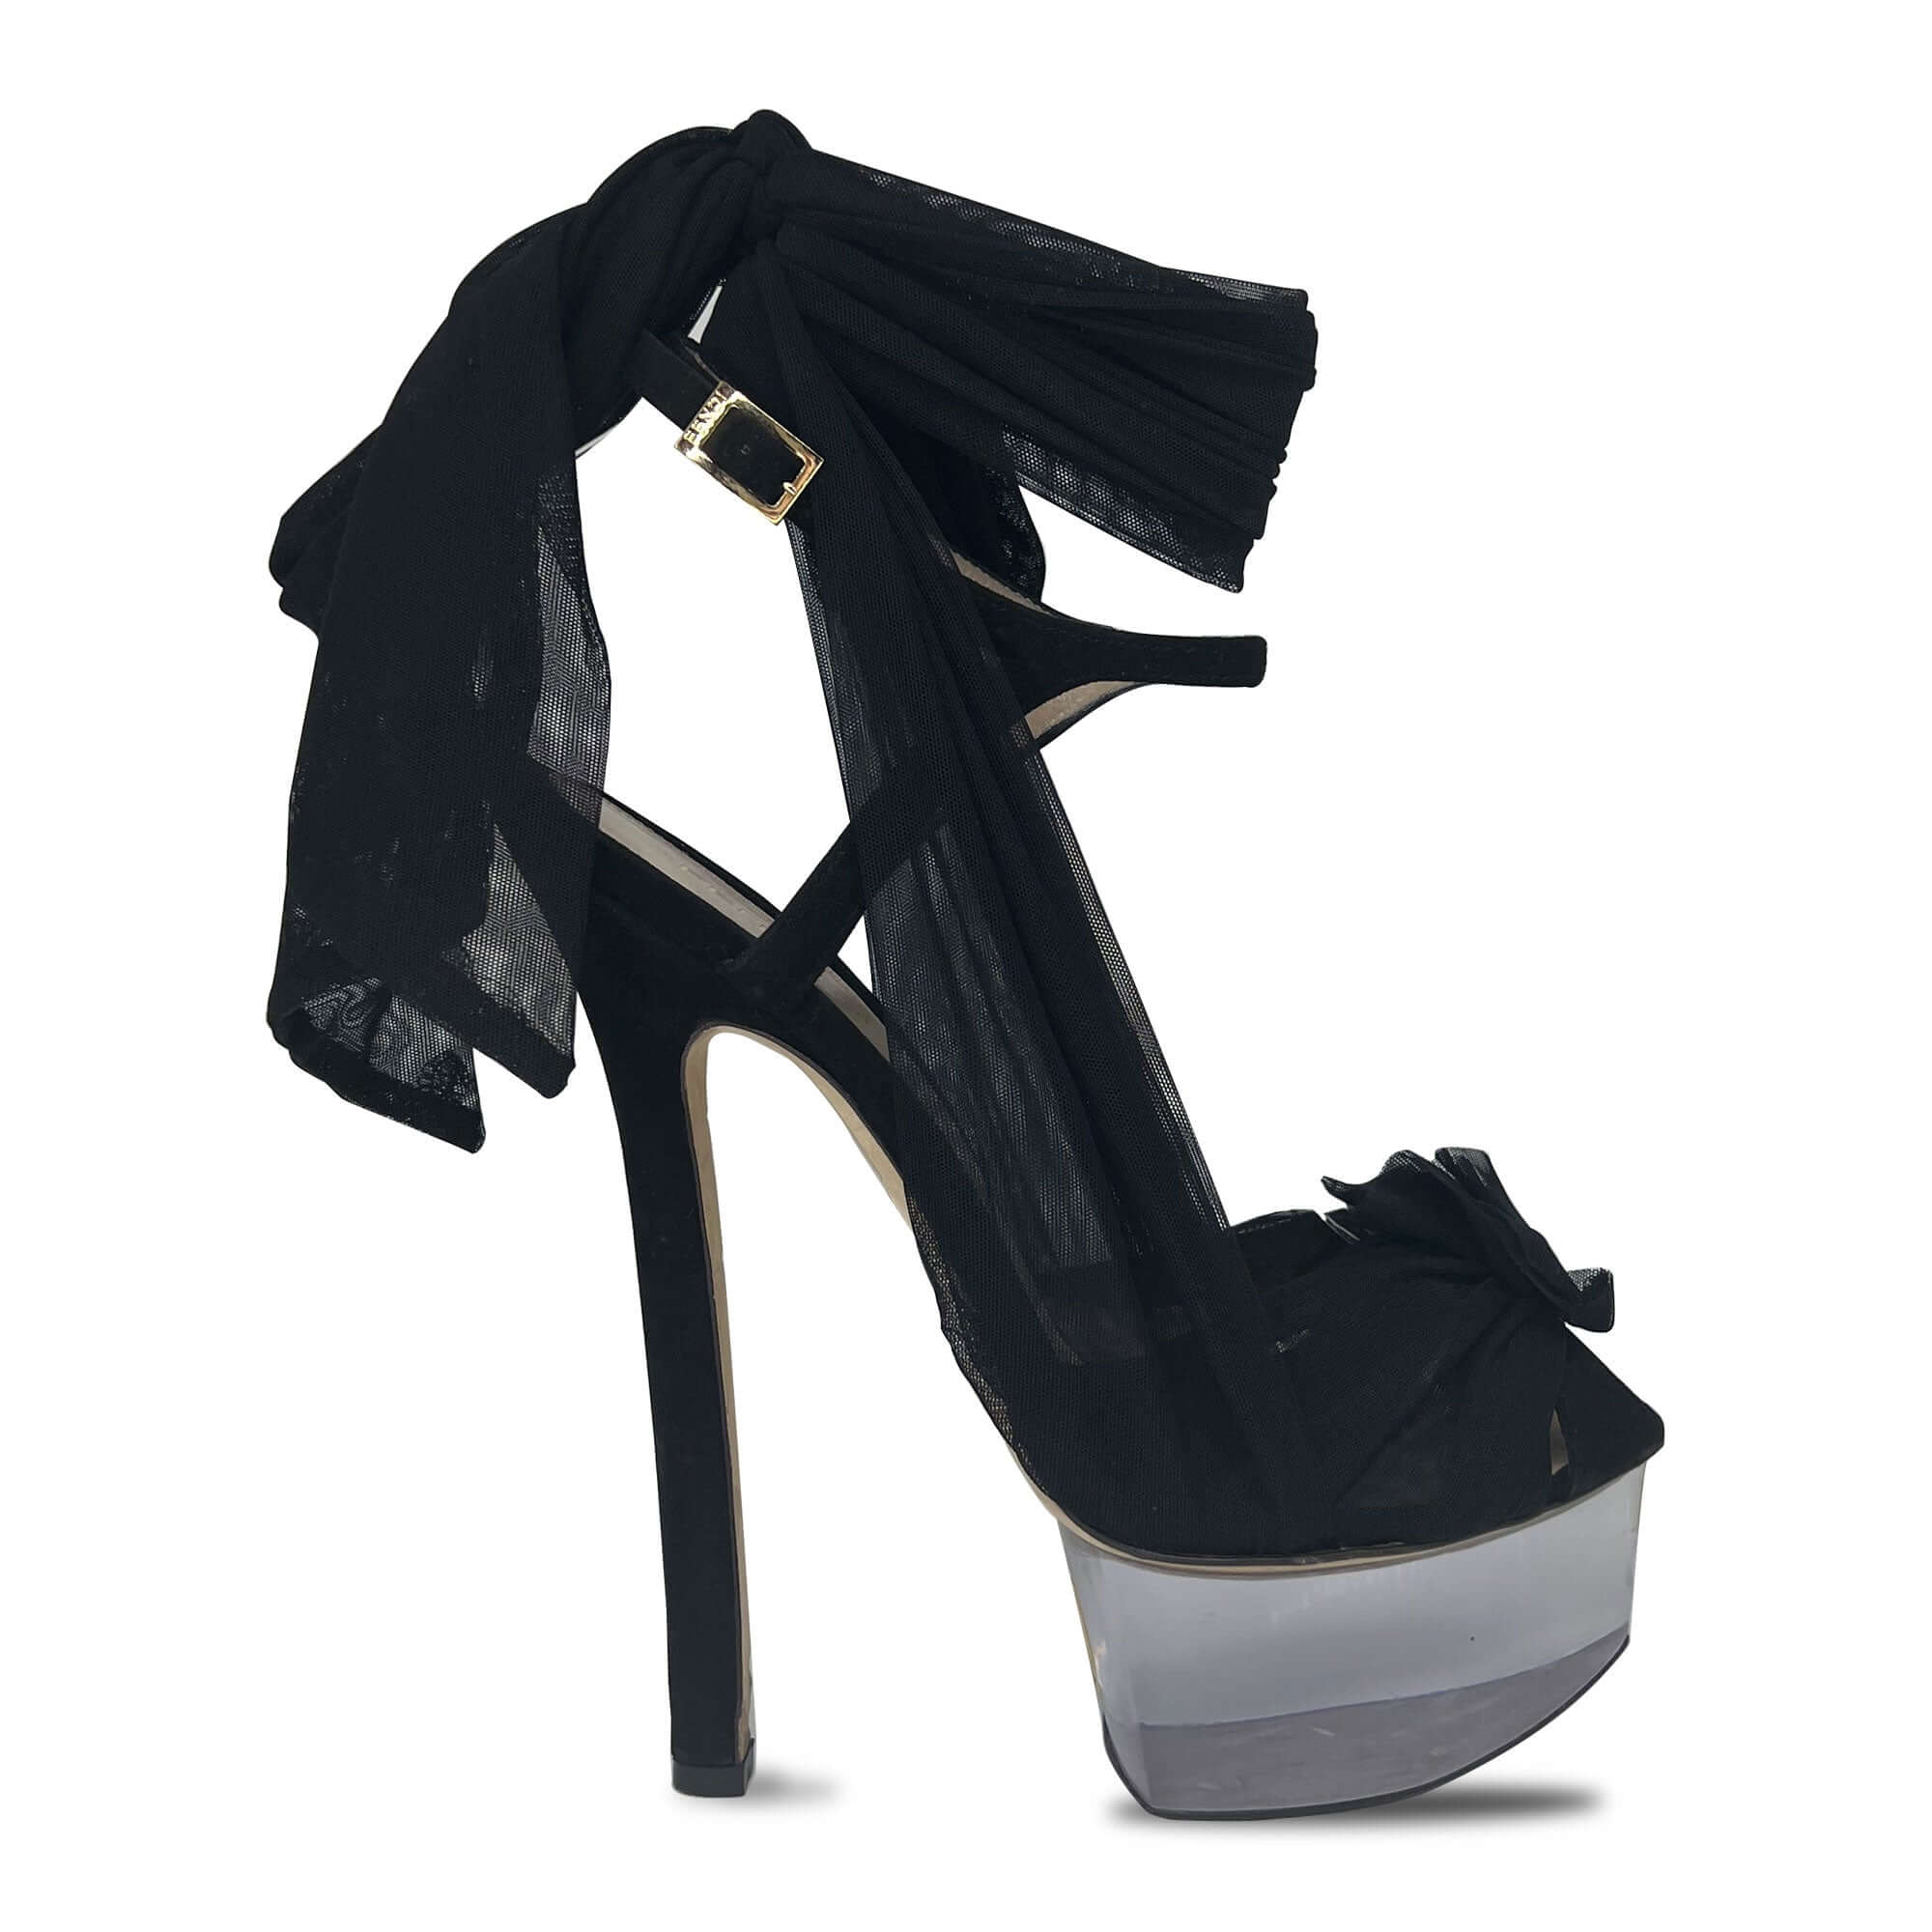 Fendi black lace-up glass sole sandal heels